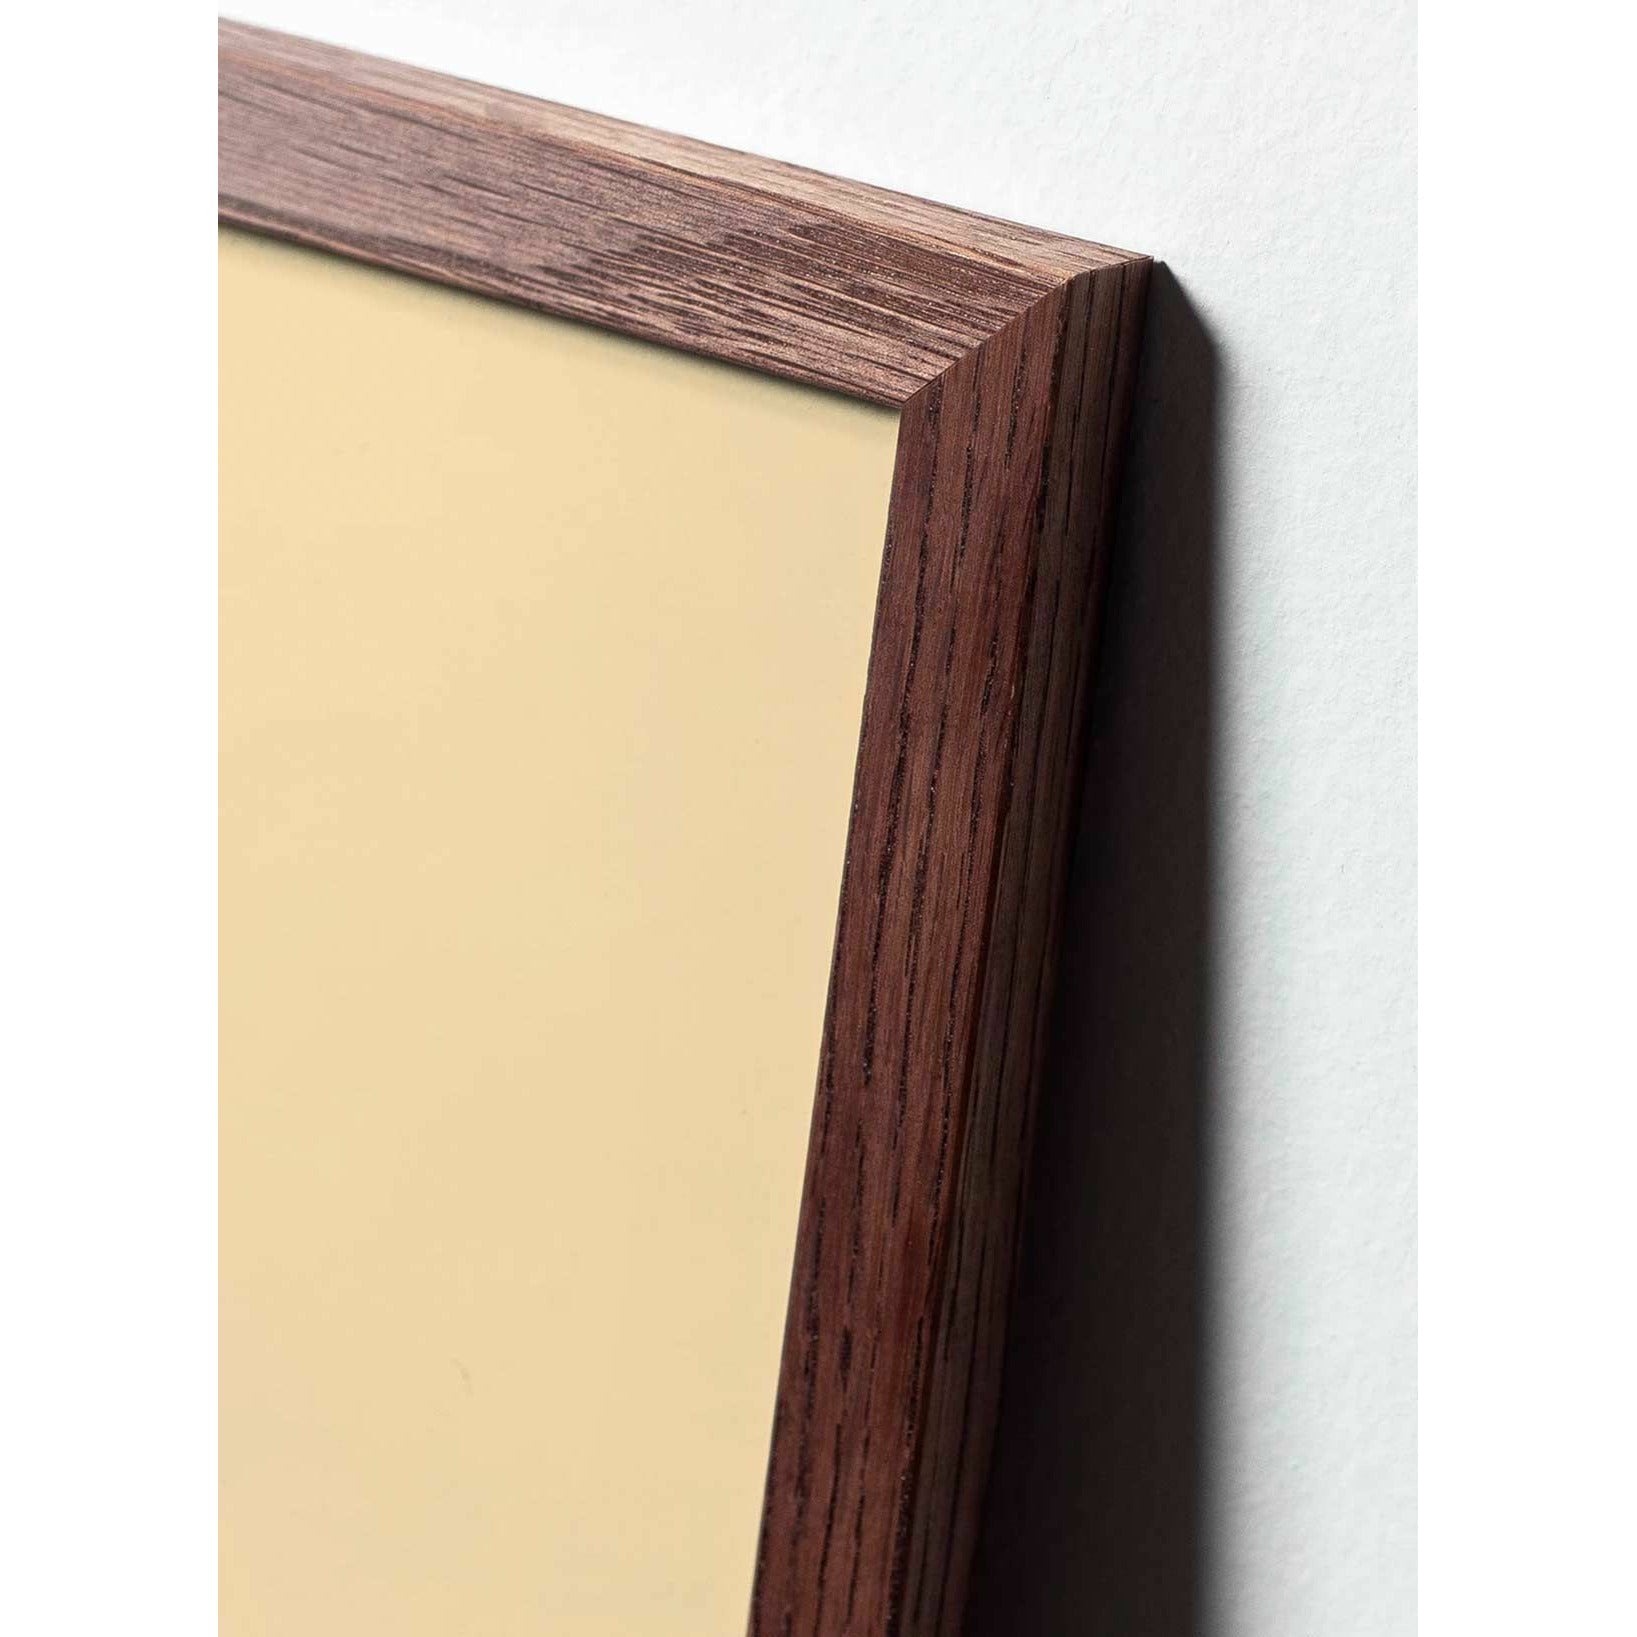 Póster de la línea de osito de peluche de creación, marco hecho de madera oscura 50x70 cm, fondo blanco